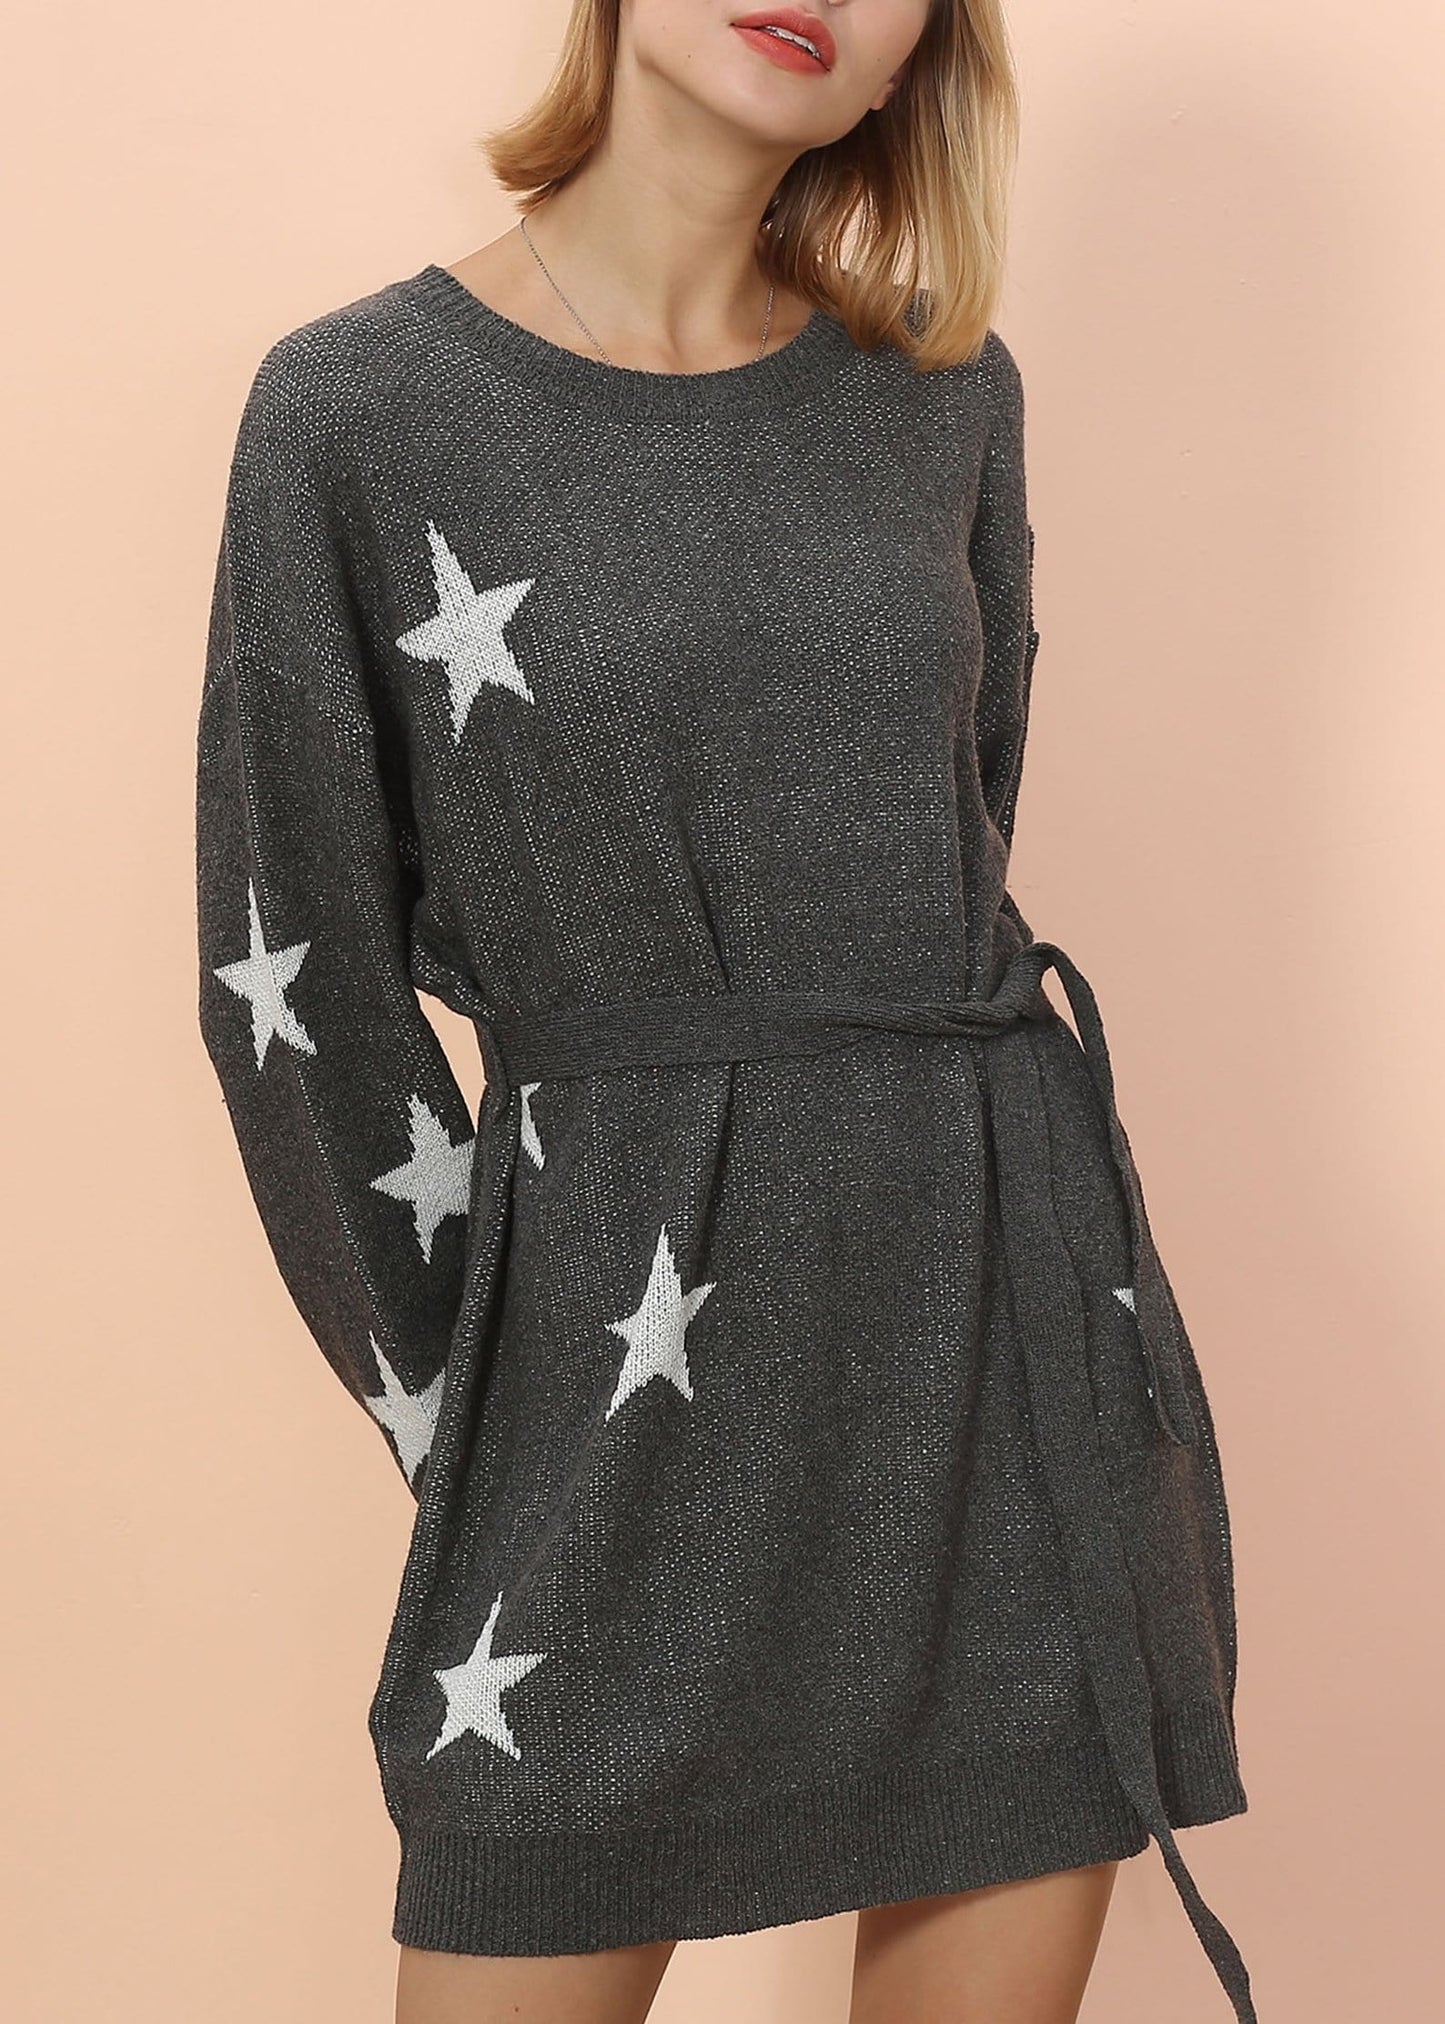 Star Pattern Sweater Dress